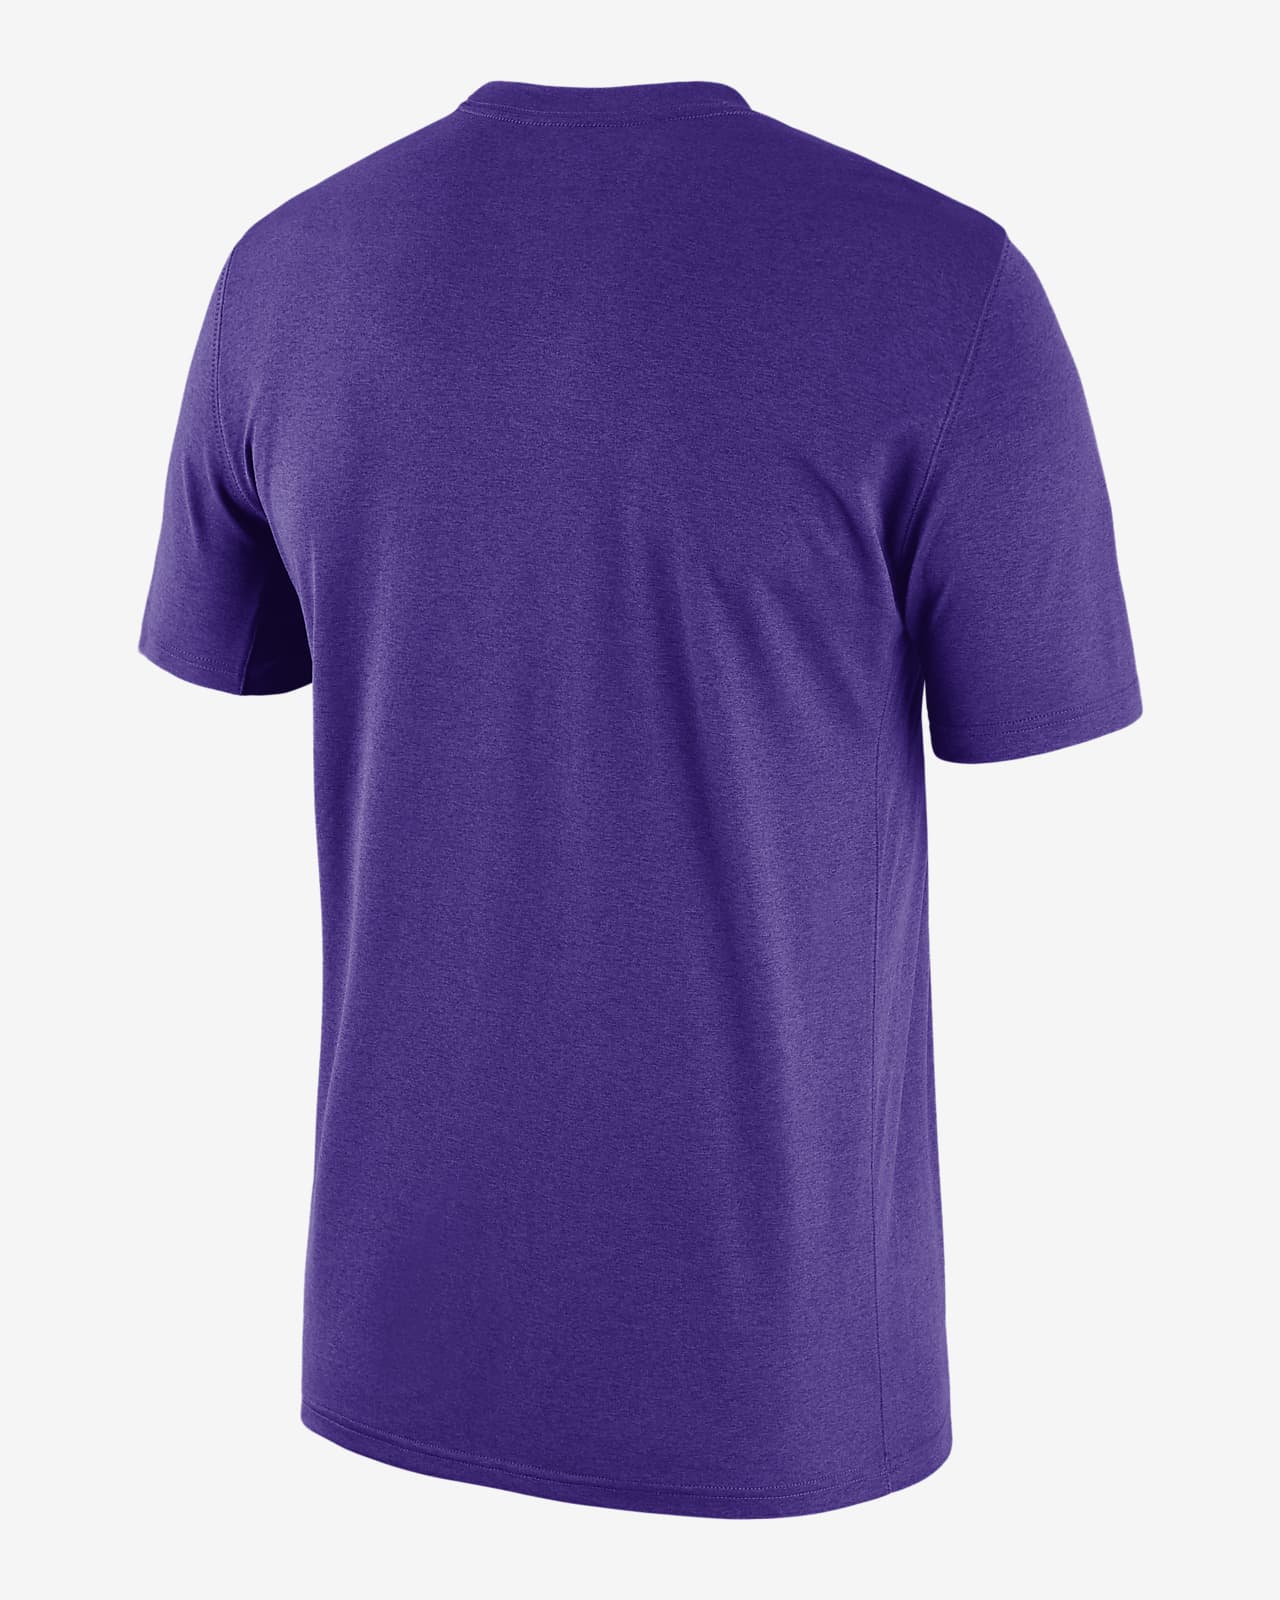 Nike Men's Los Angeles Lakers NBA Courtside Jacket, Purple - Size XLrg